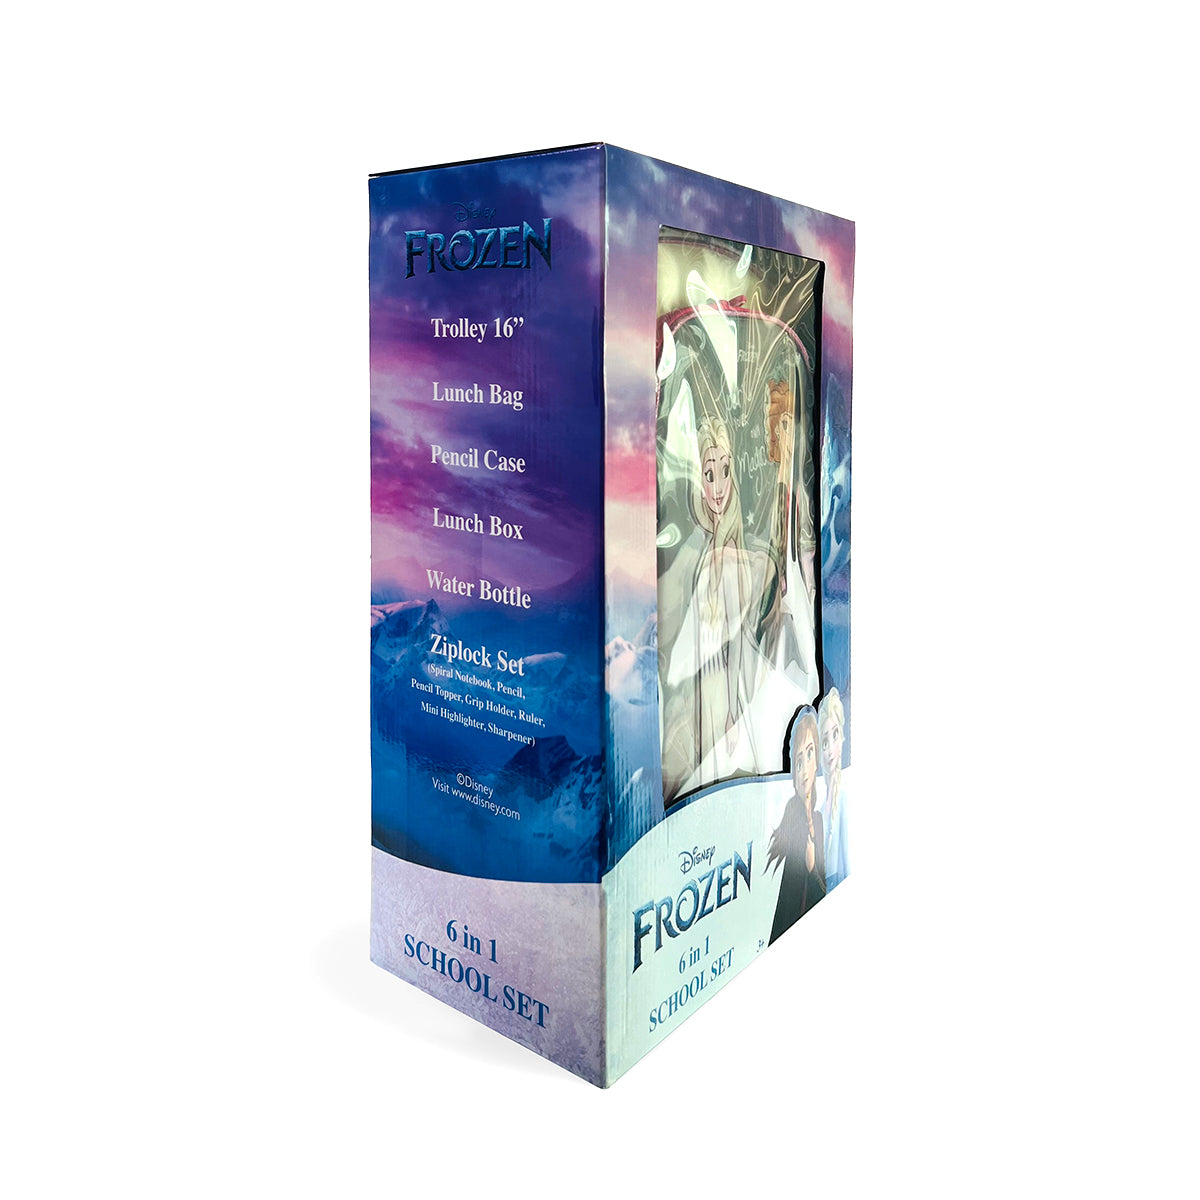 Disney Frozen Spark Your Own Magic 16" 6-in-1 Trolley Box Set